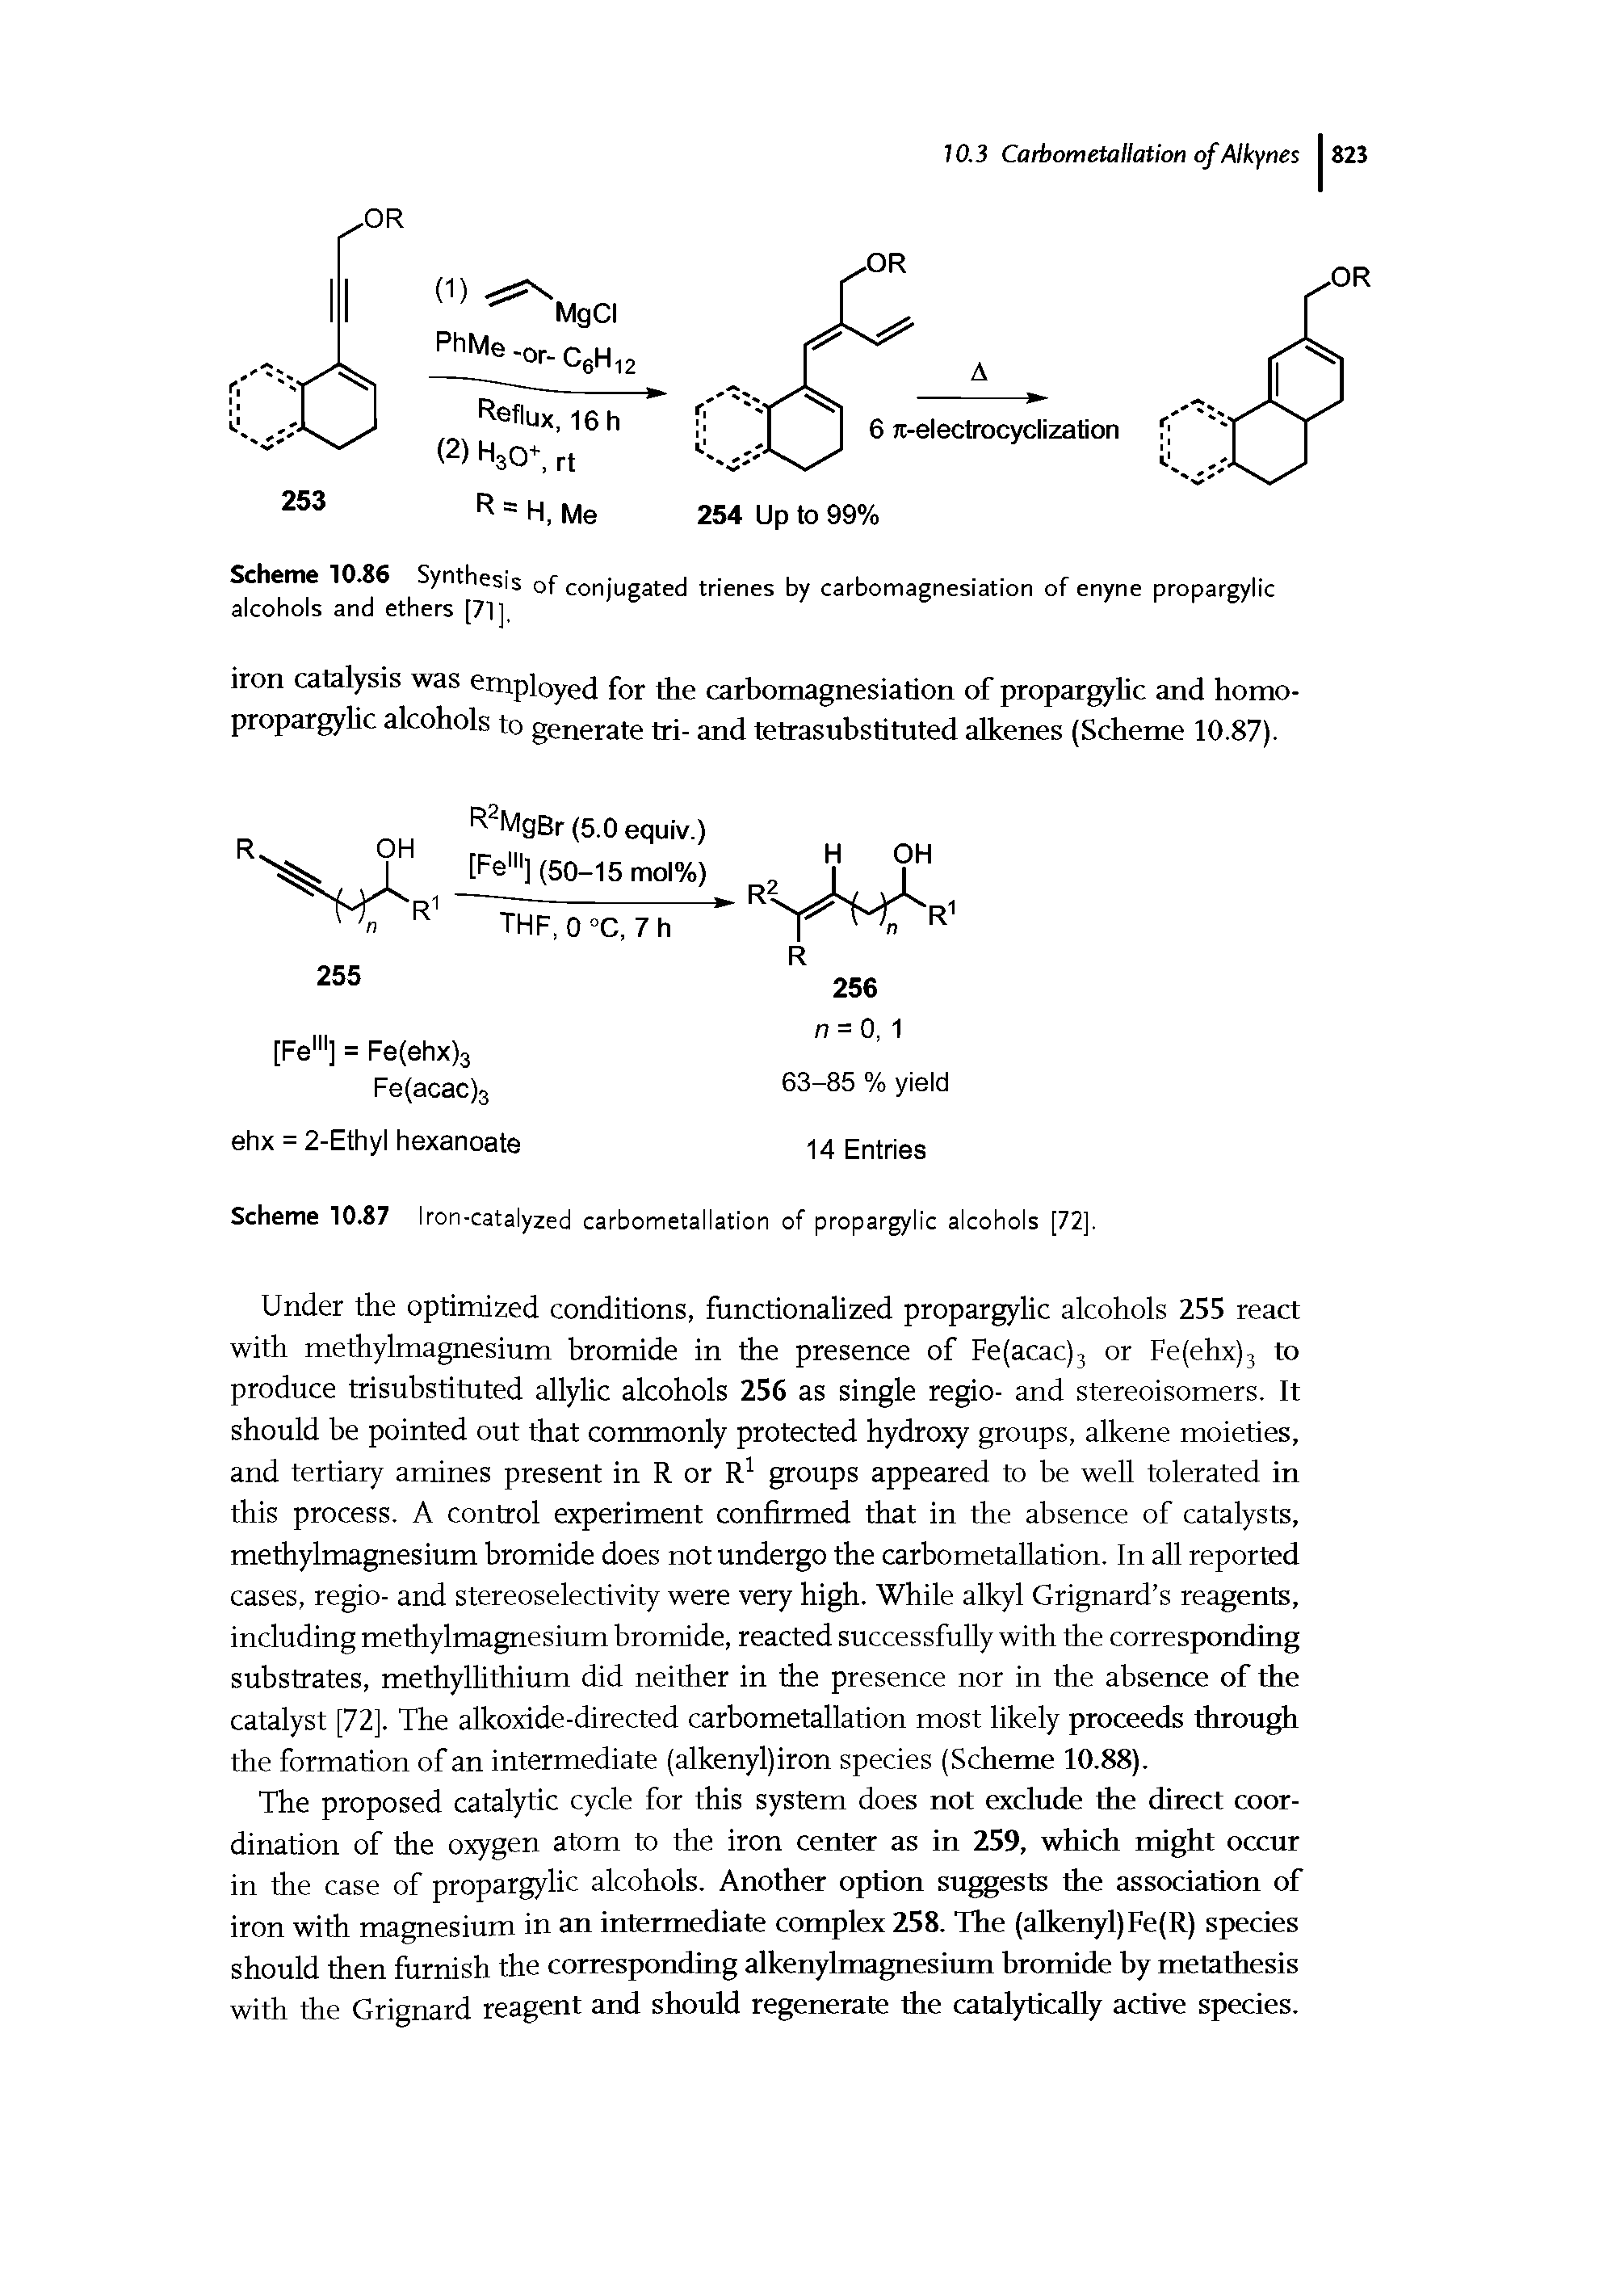 Scheme 10.87 Iron-catalyzed carbometallation of propargylic alcohols [72].